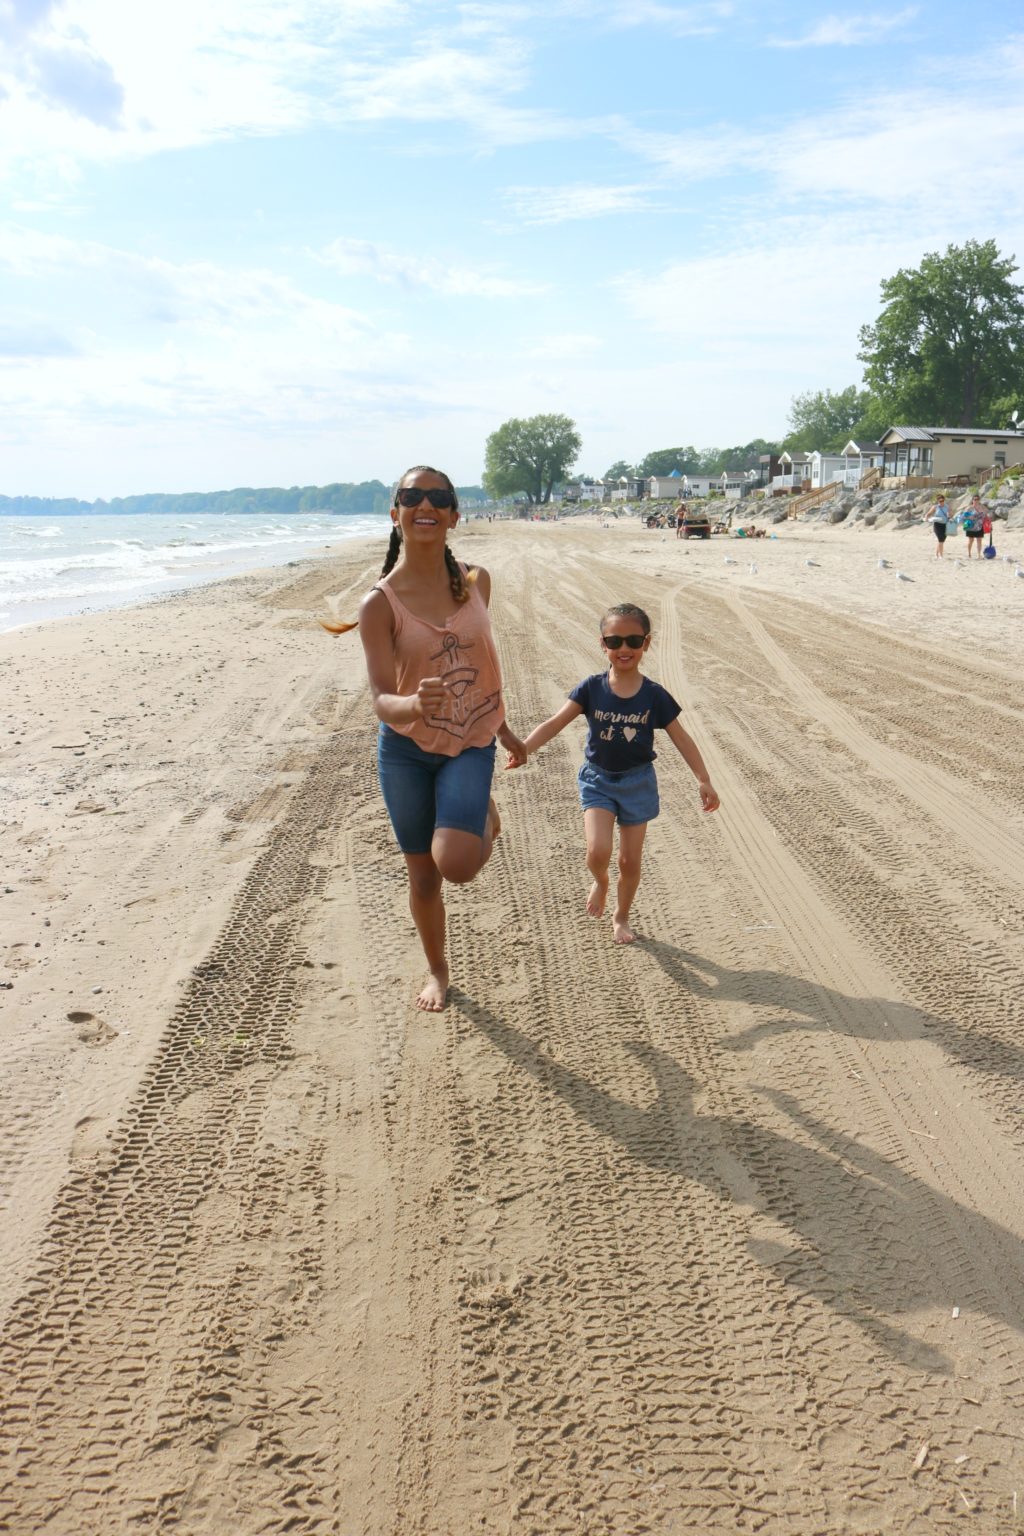 Mimi and Gabby running on the beach.